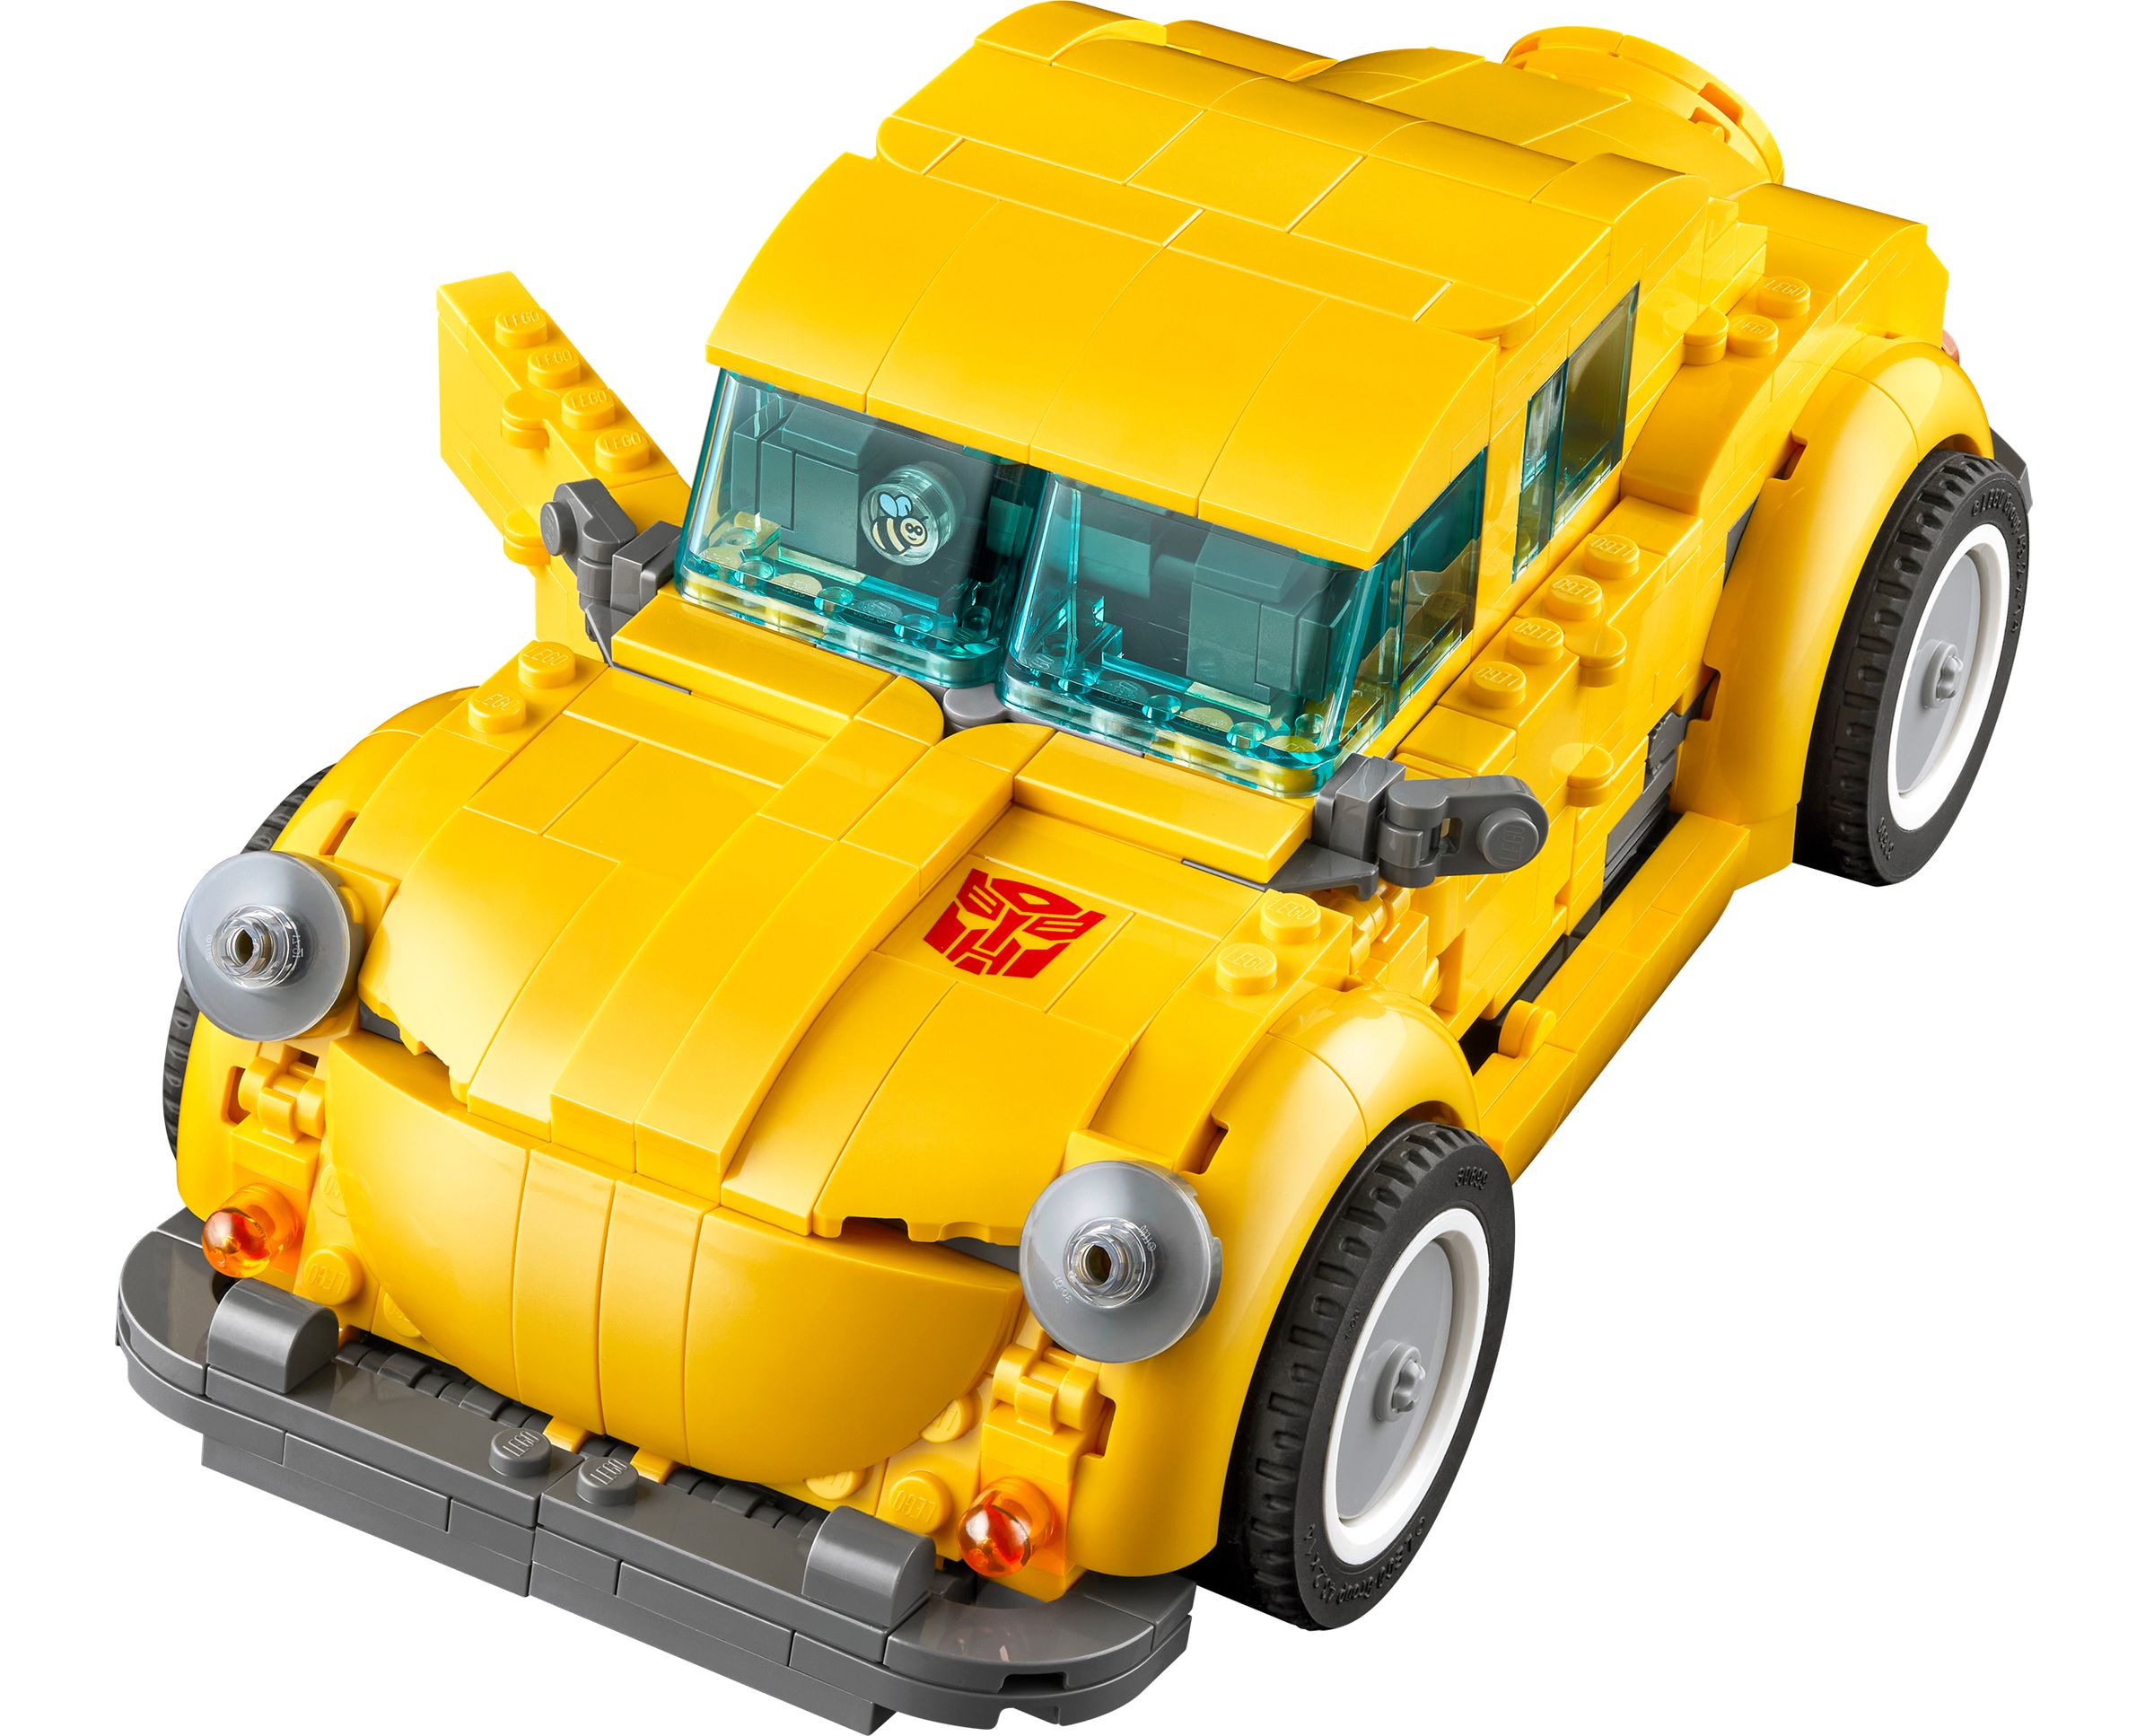 Lego Bumblebee in vehicle mode with the passenger side door opened.